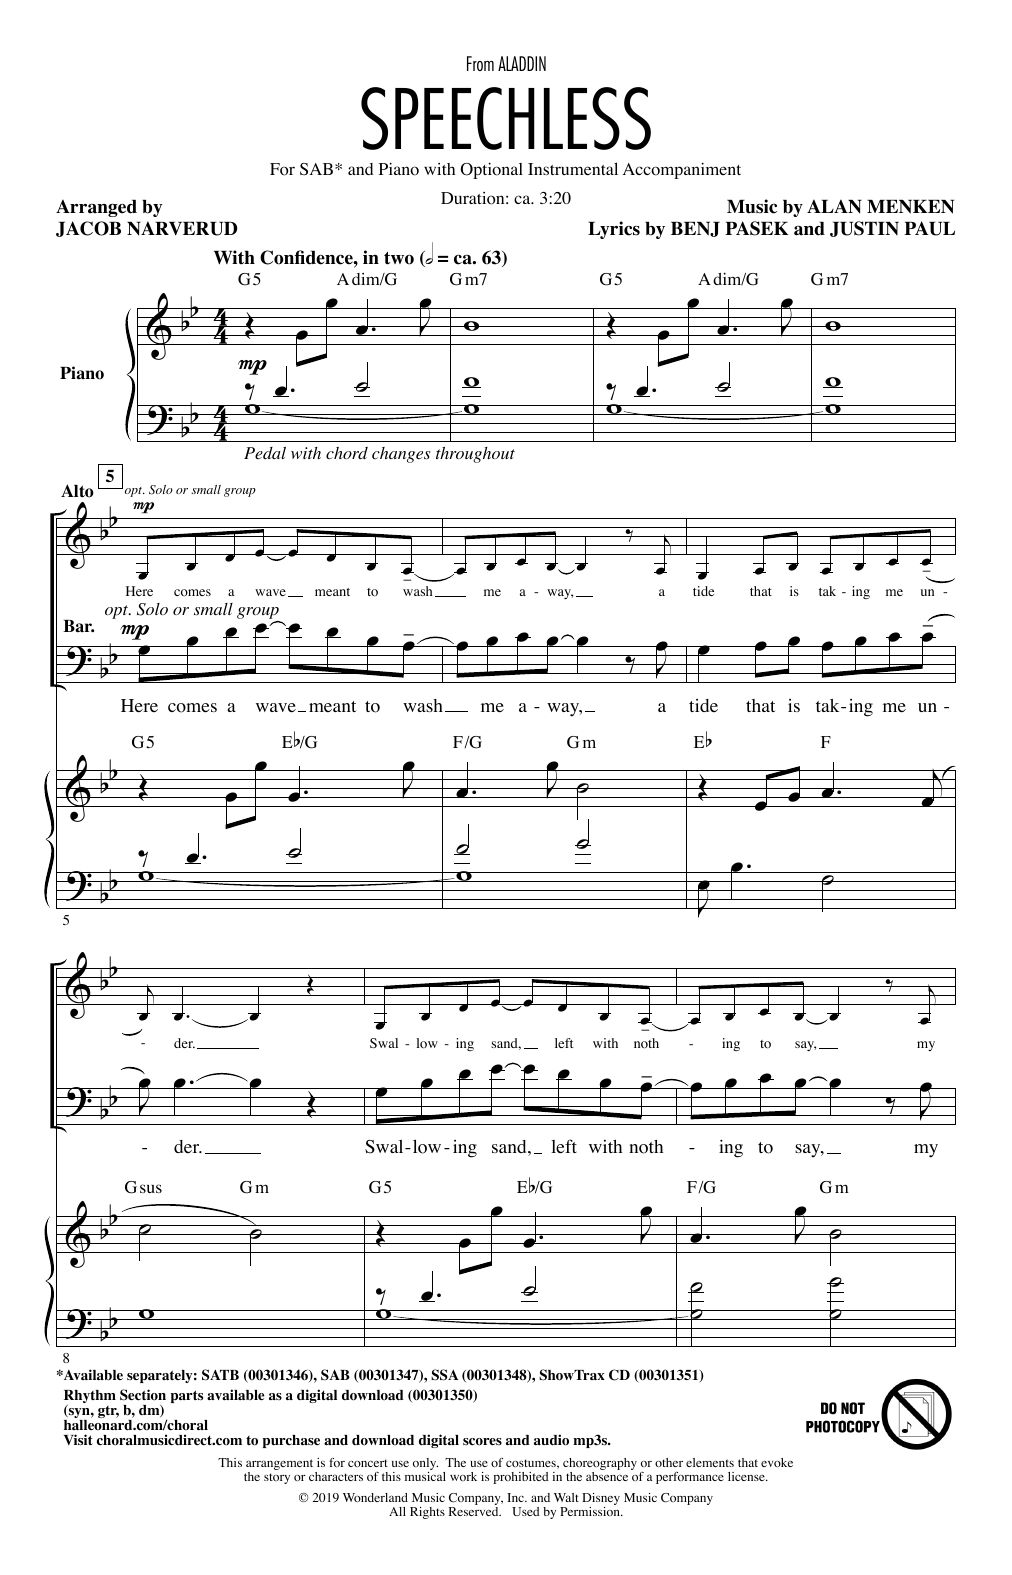 Naomi Scott Speechless (from Disney's Aladdin) (arr. Jacob Narverud) Sheet Music Notes & Chords for SSA Choir - Download or Print PDF